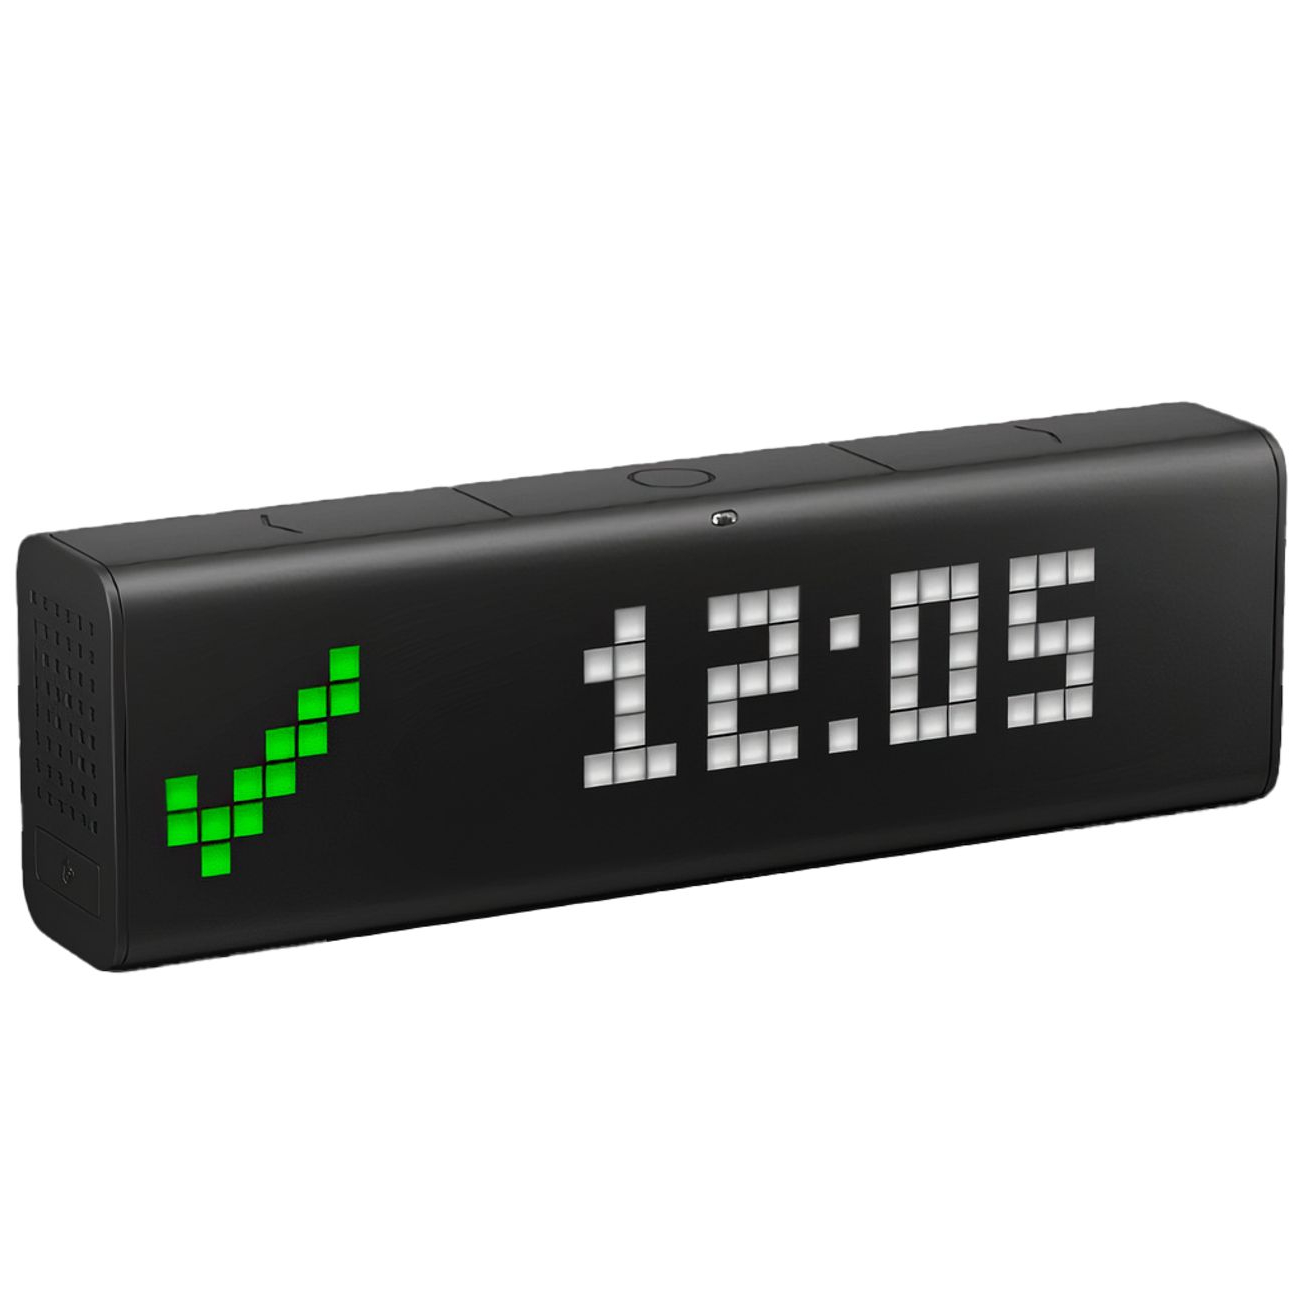 LaMetric TIME Smart Clock / with Multi Function Pixel Display in Qatar